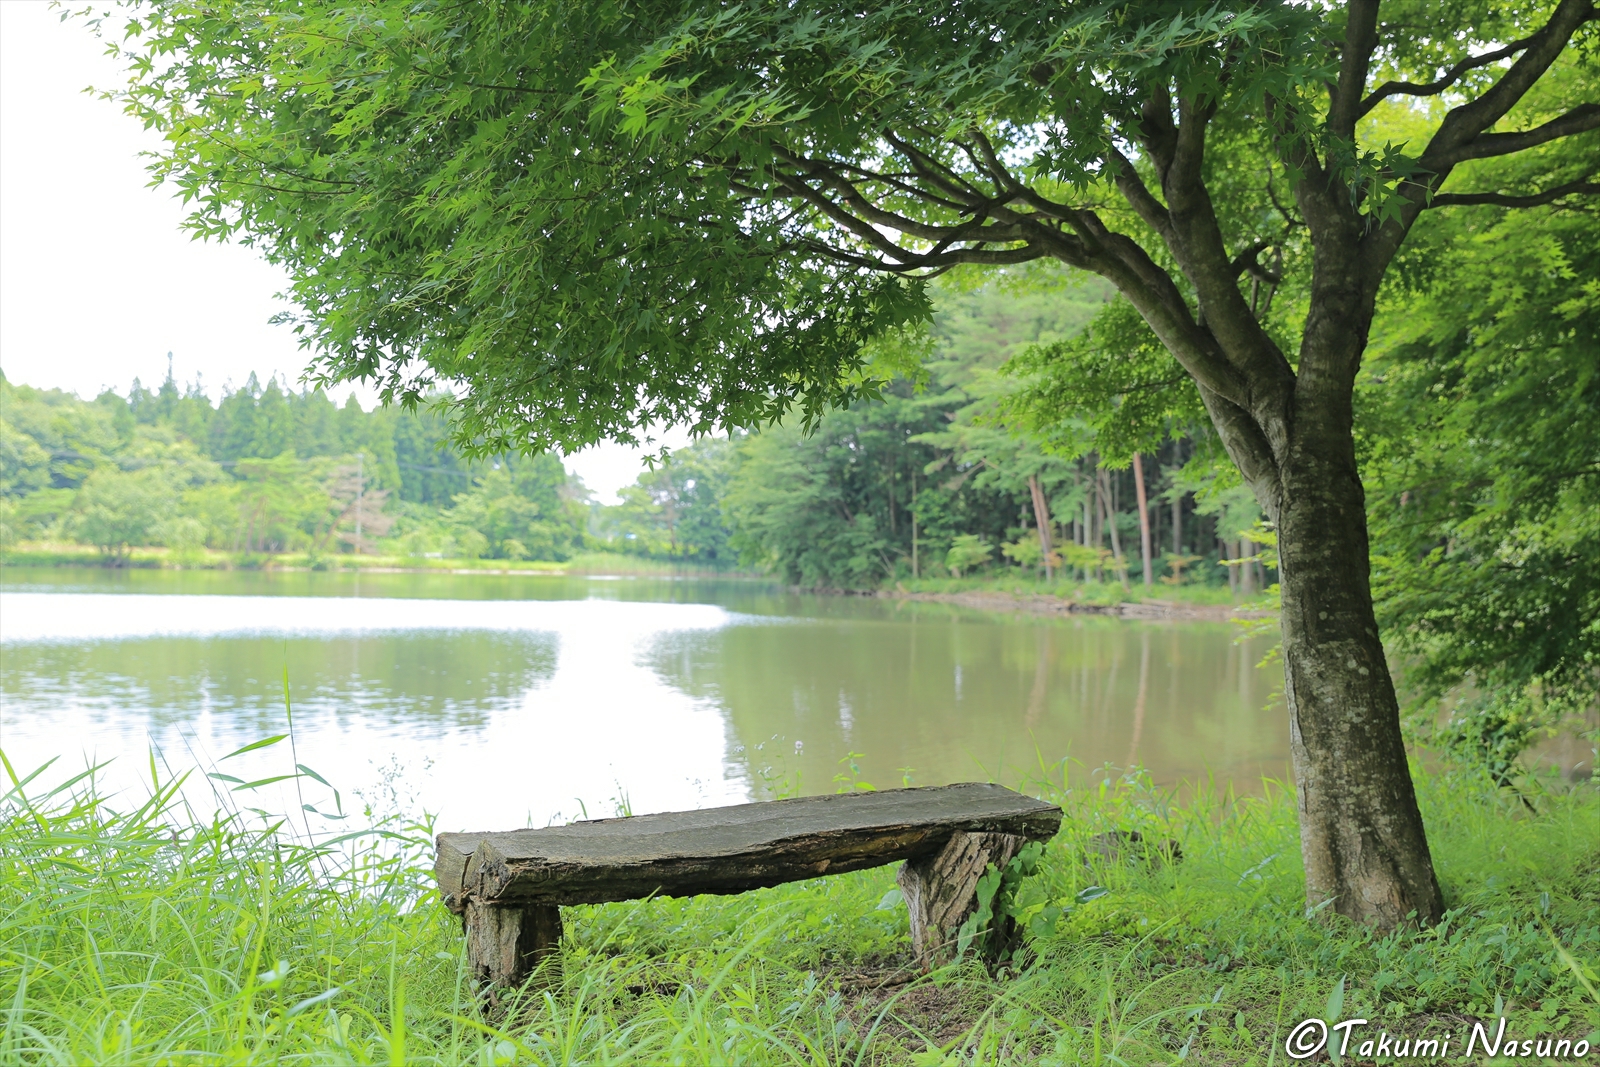 Wooden Bench along Oshimizu Pond